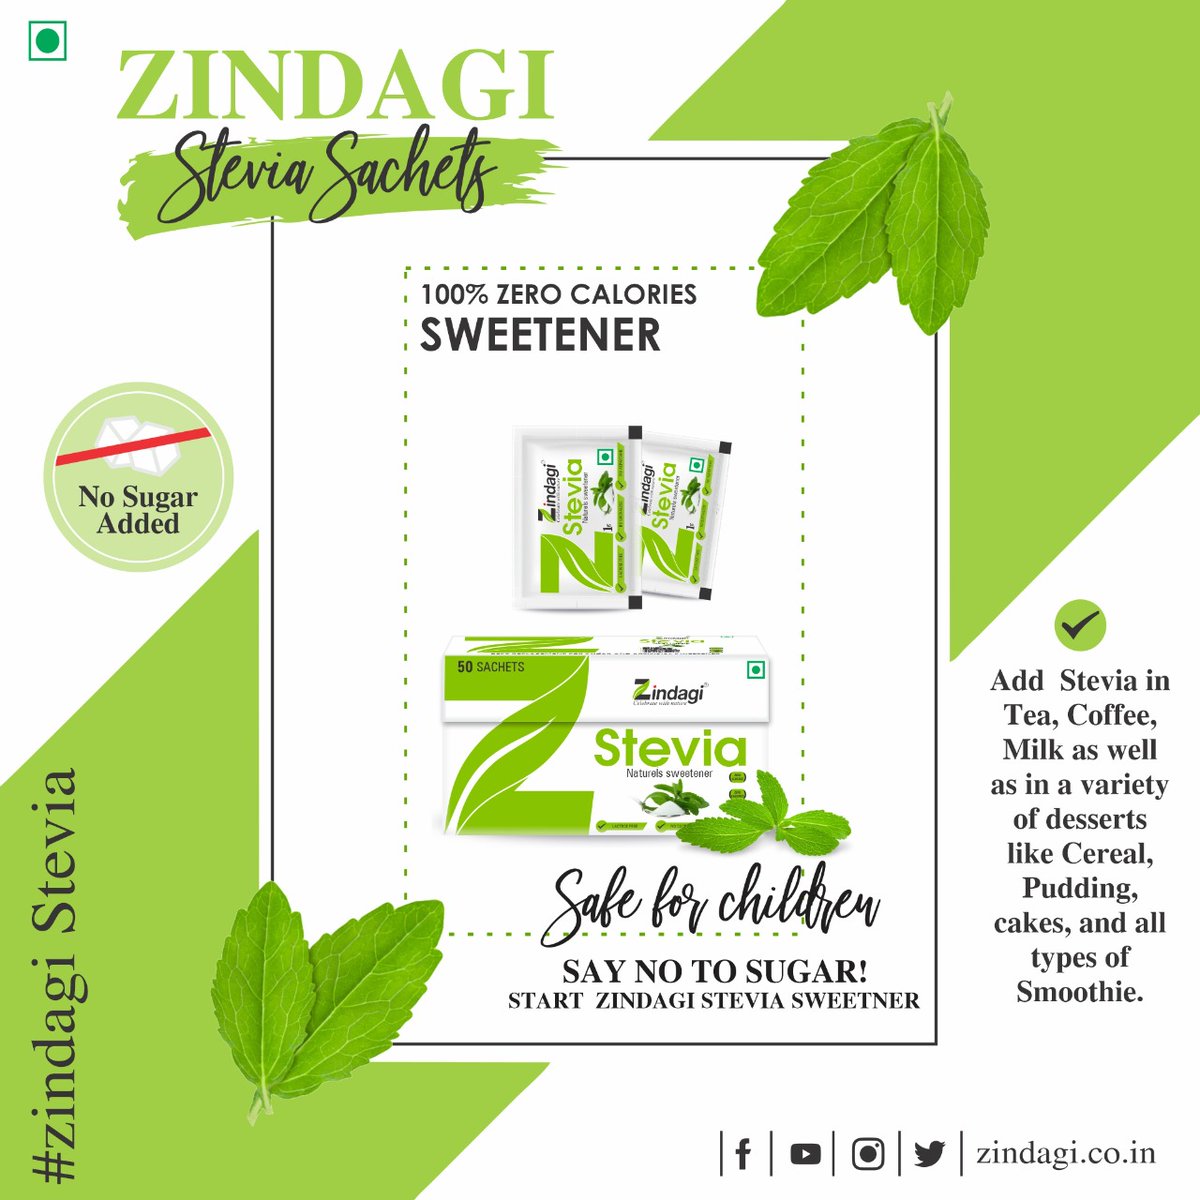 #stevia: Sweetness from nature.

Website link: zindagi.co.in
Contact us on 070870 26860

#Zindagistevia #steviapowder #SteviaLiquid #steviasachets #sugarfree #sweetener #steviasugar #zerocalorie #natural